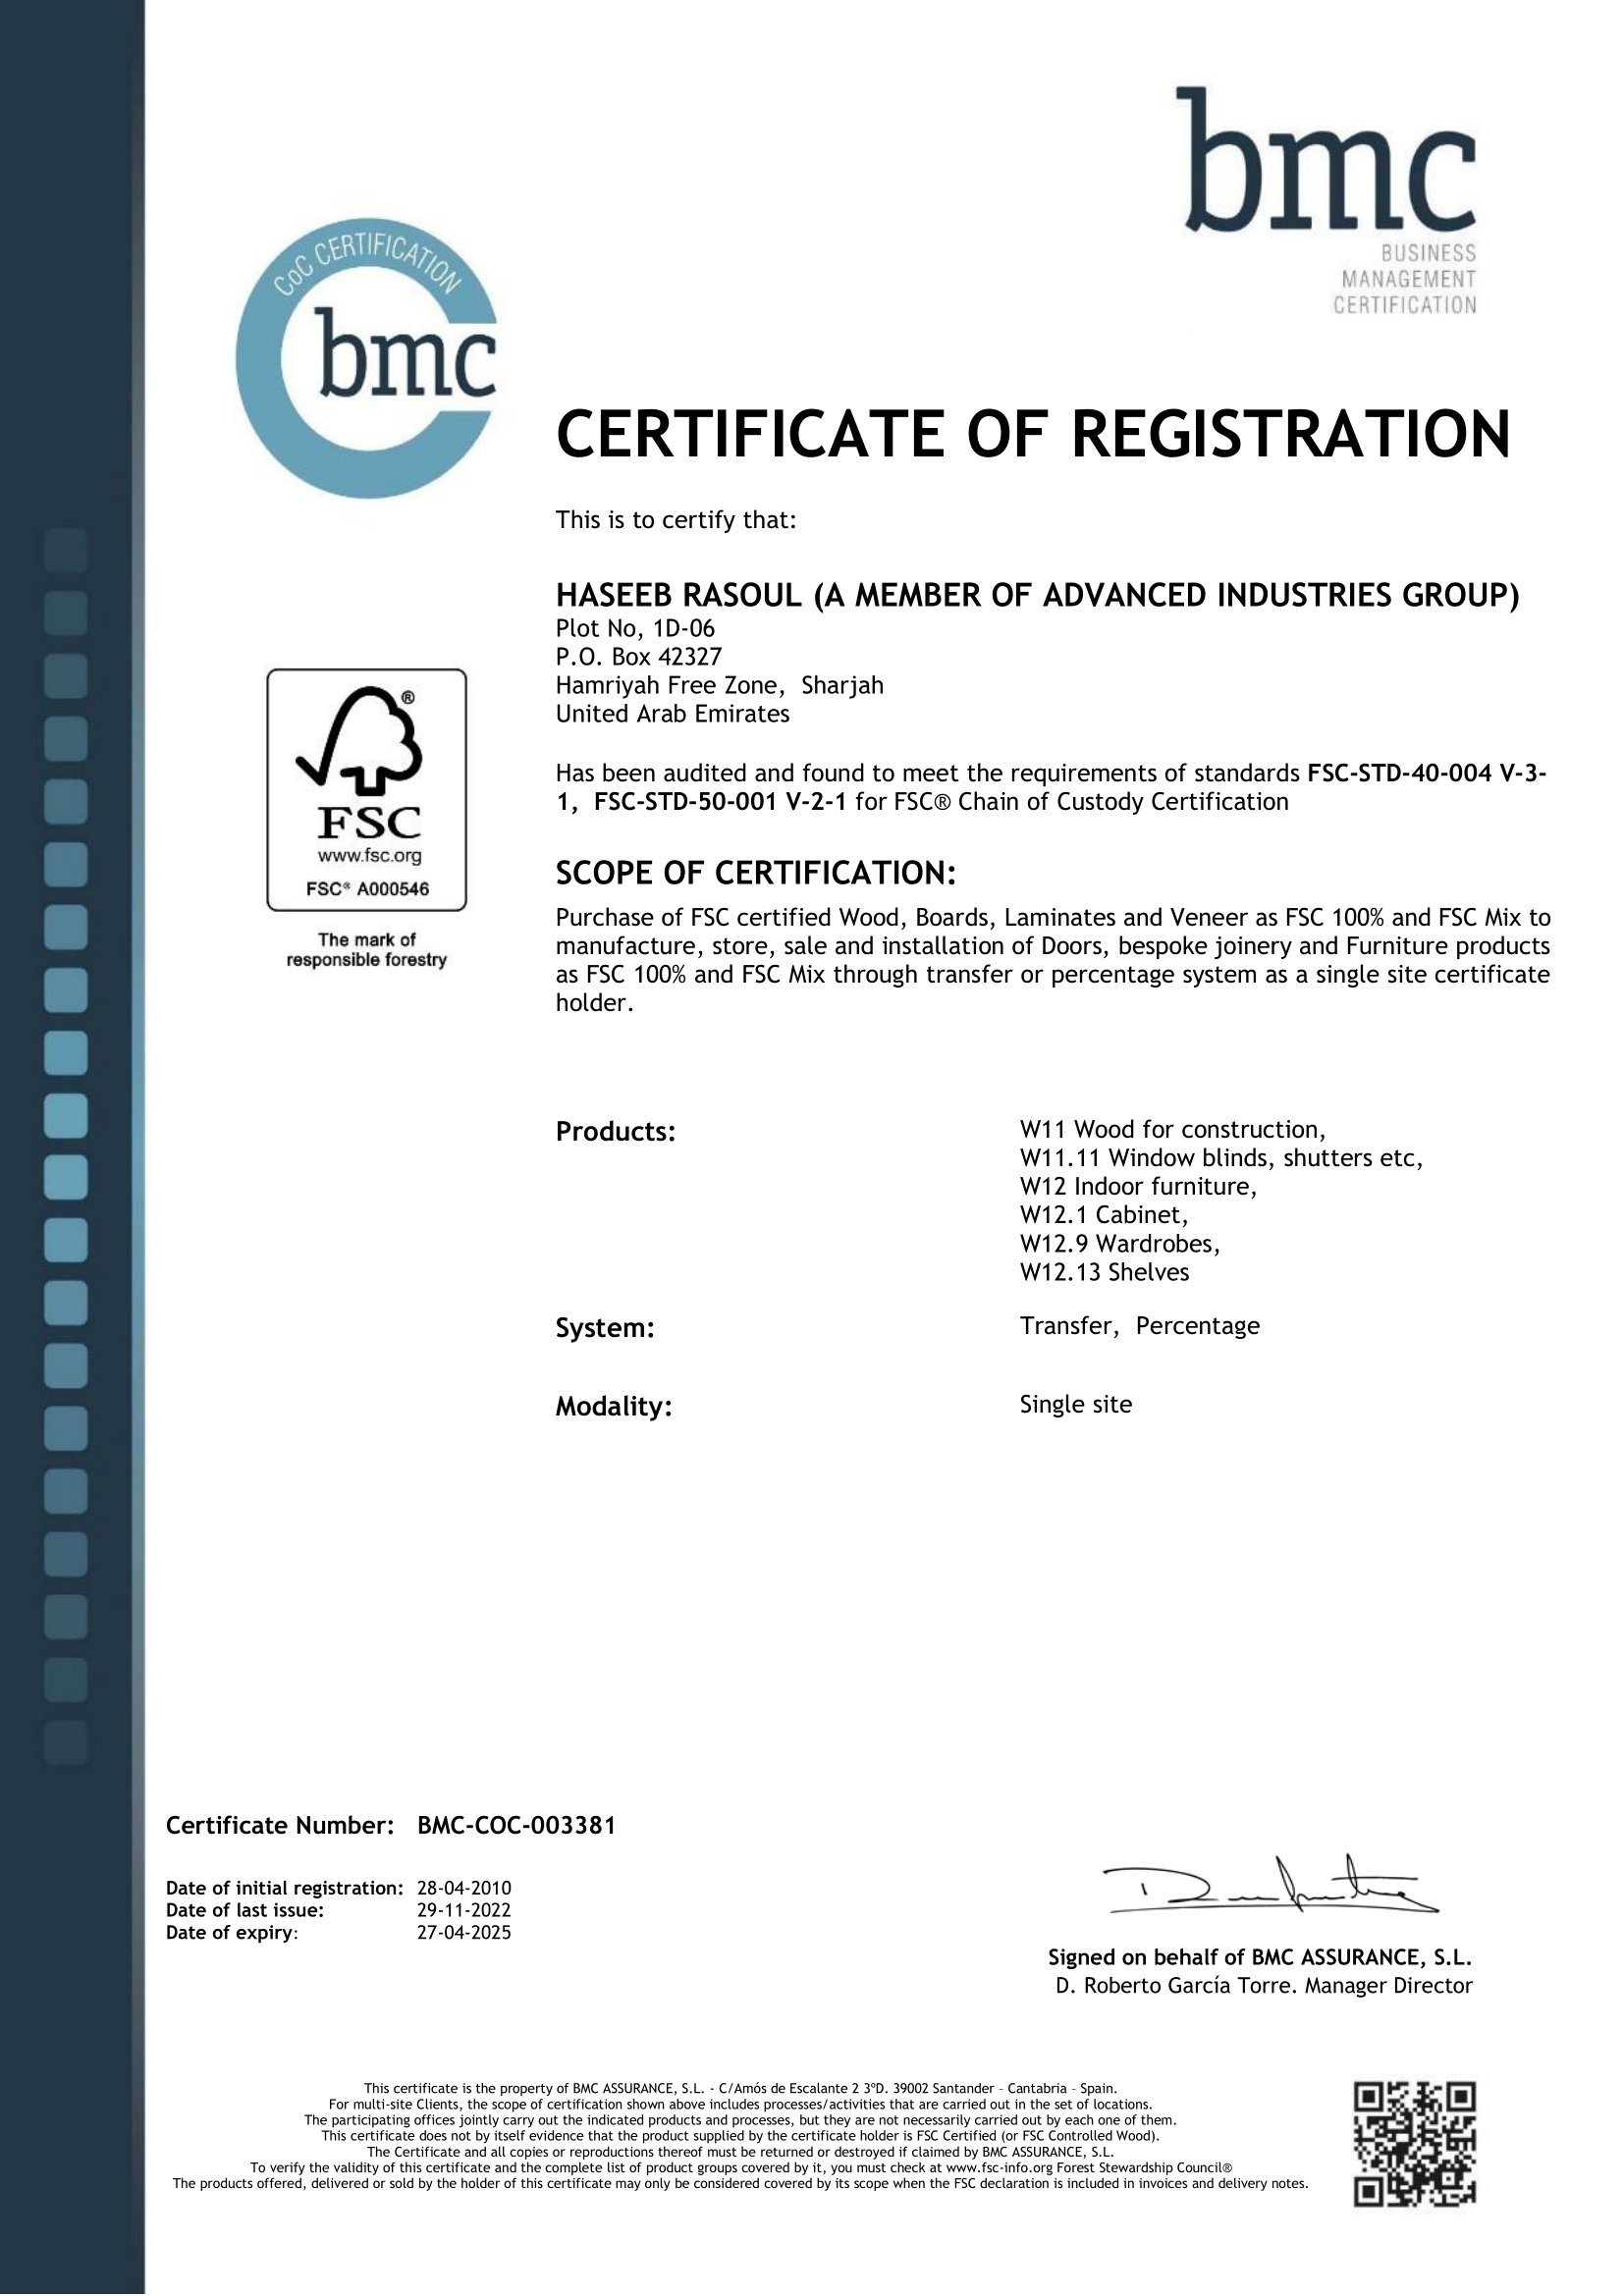 Intertek UL Fire Rated Certifications